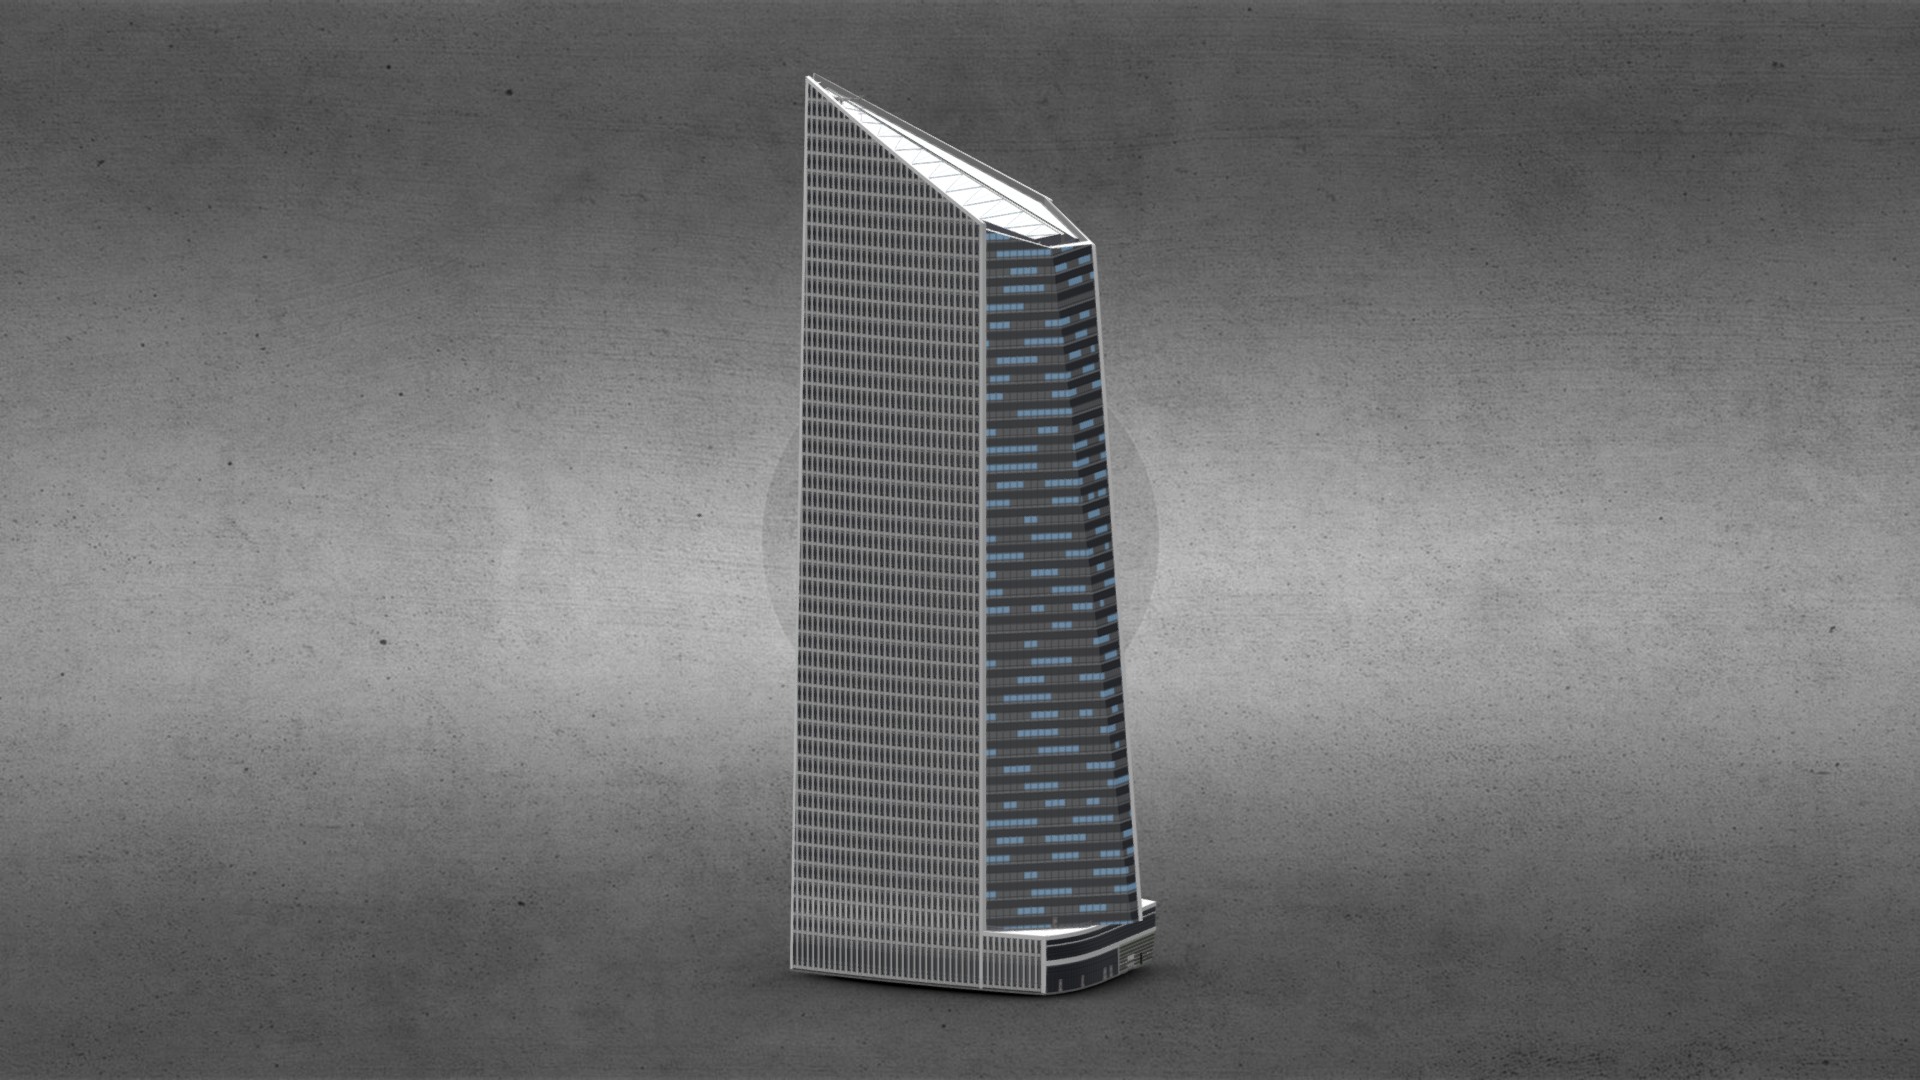 3D model Tour Granite – La Défense / Paris - This is a 3D model of the Tour Granite - La Défense / Paris. The 3D model is about a tall building with a glass front.